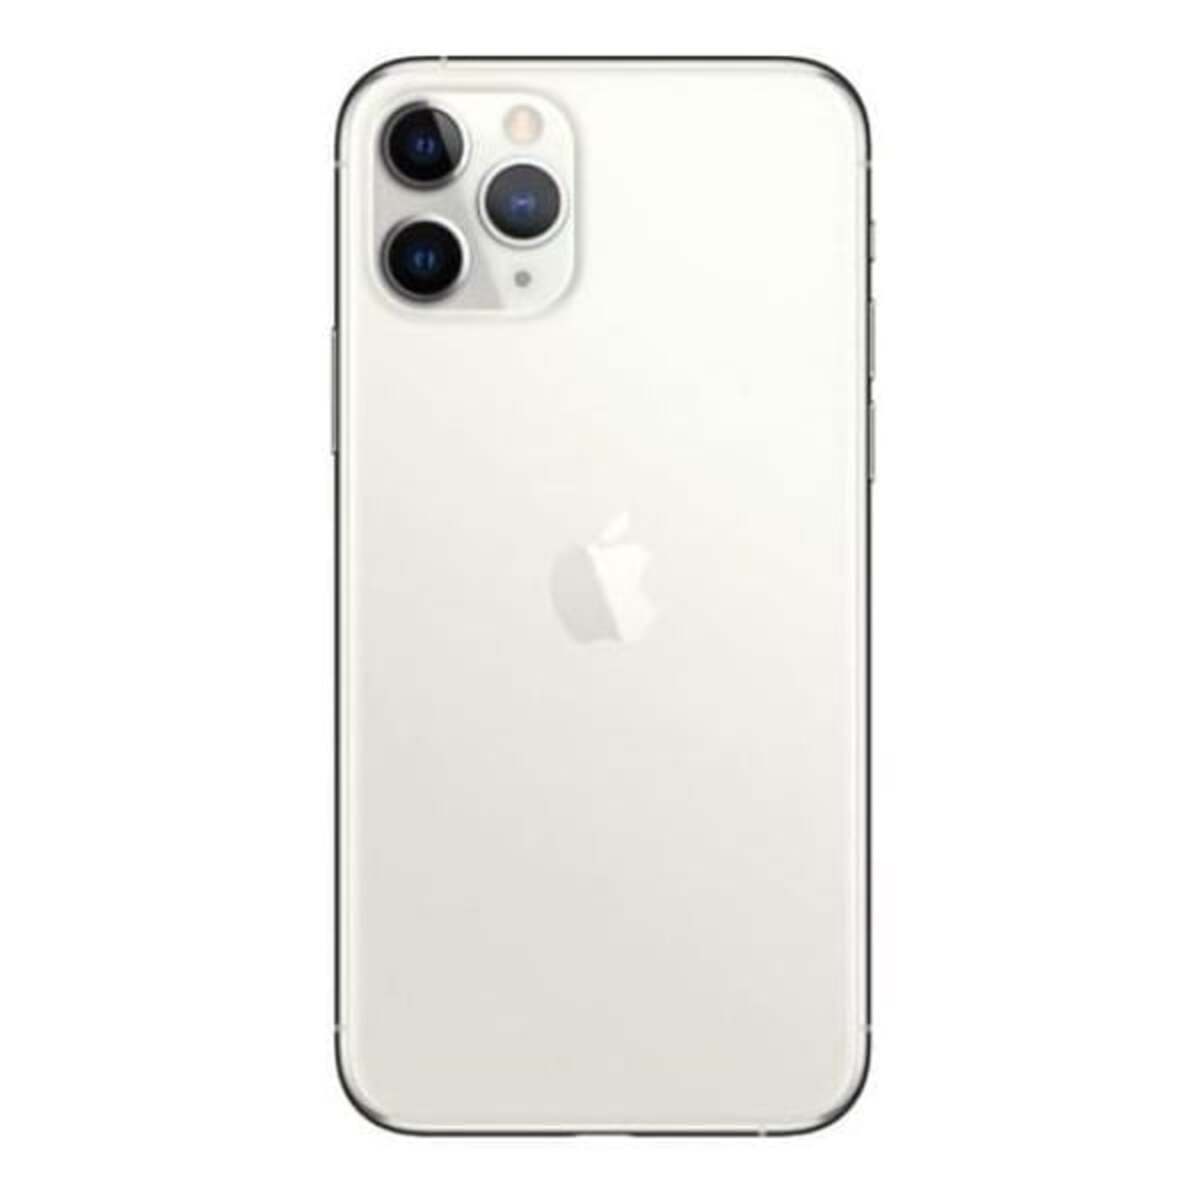 Apple Iphone 11 Pro Max 256gb Silver - International Version